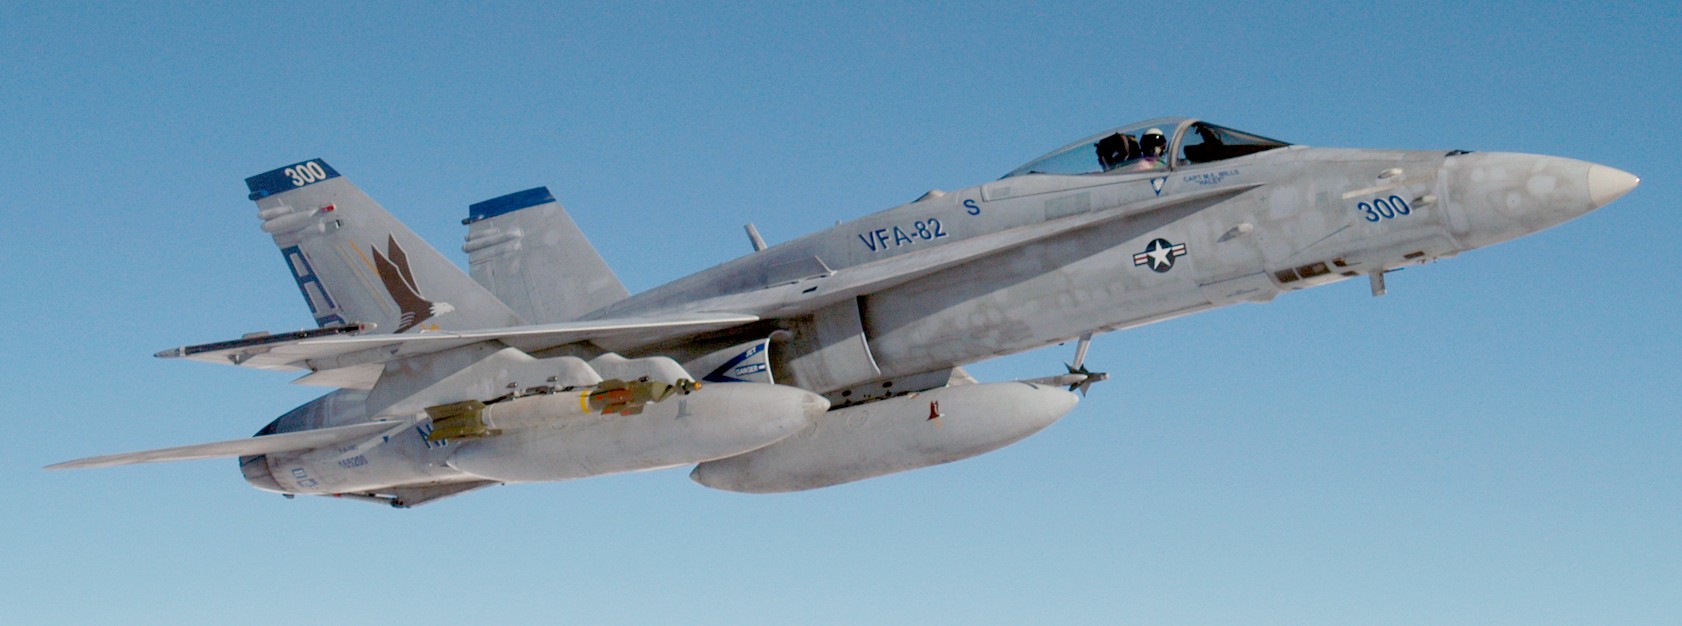 vfa-82 marauders strike fighter squadron f/a-18c hornet cvw-1 uss enterprise cvn-65 63